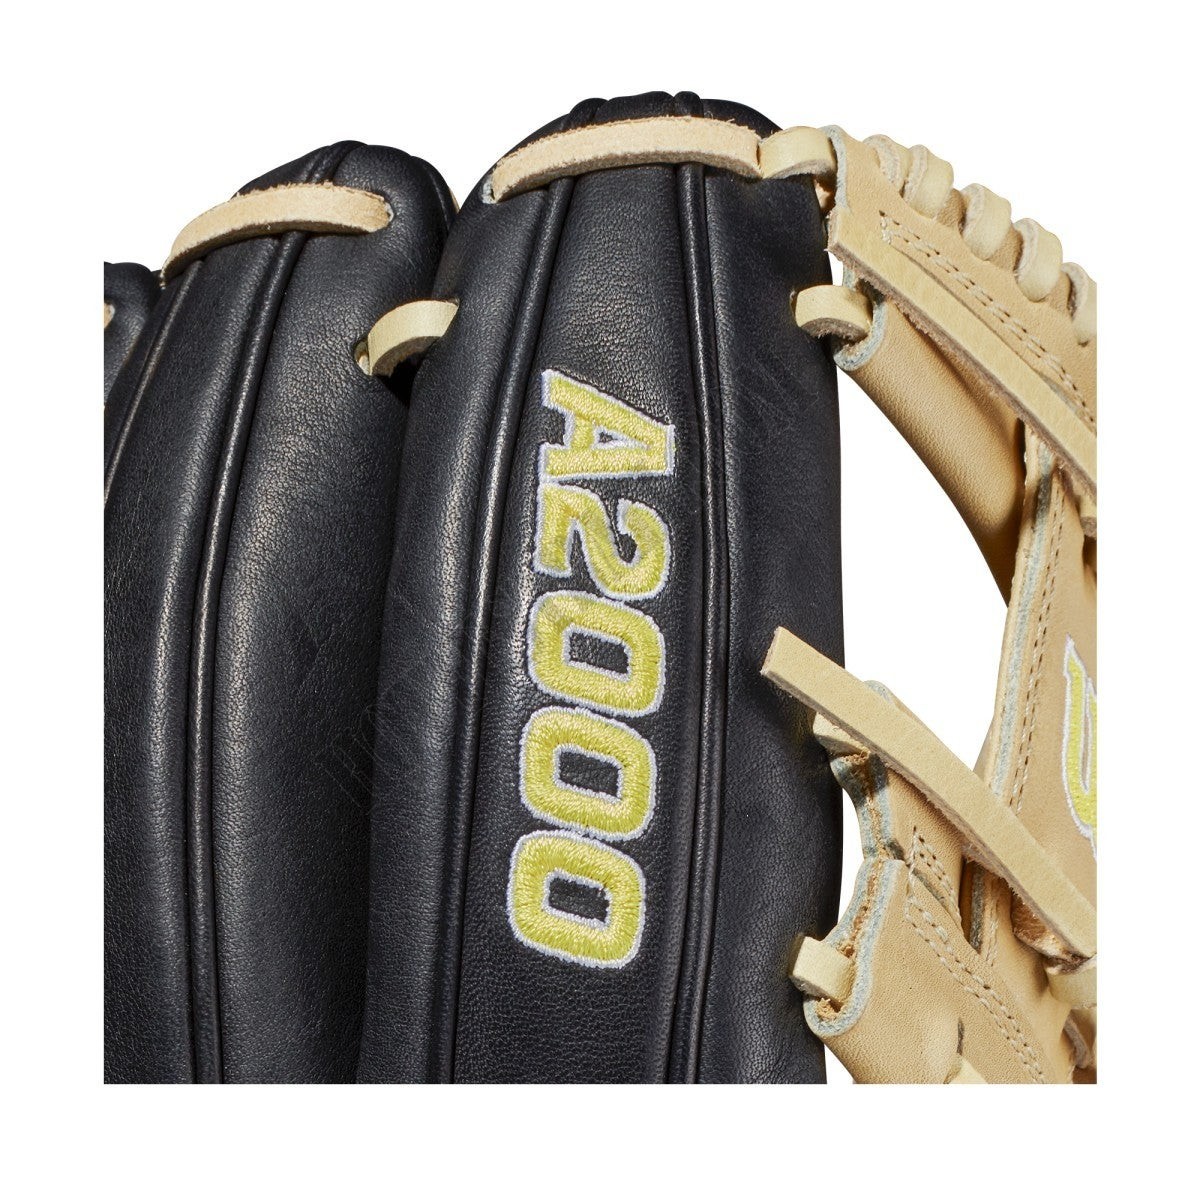 2021 A2000 1786 11.5" Infield Baseball Glove ● Wilson Promotions - -6